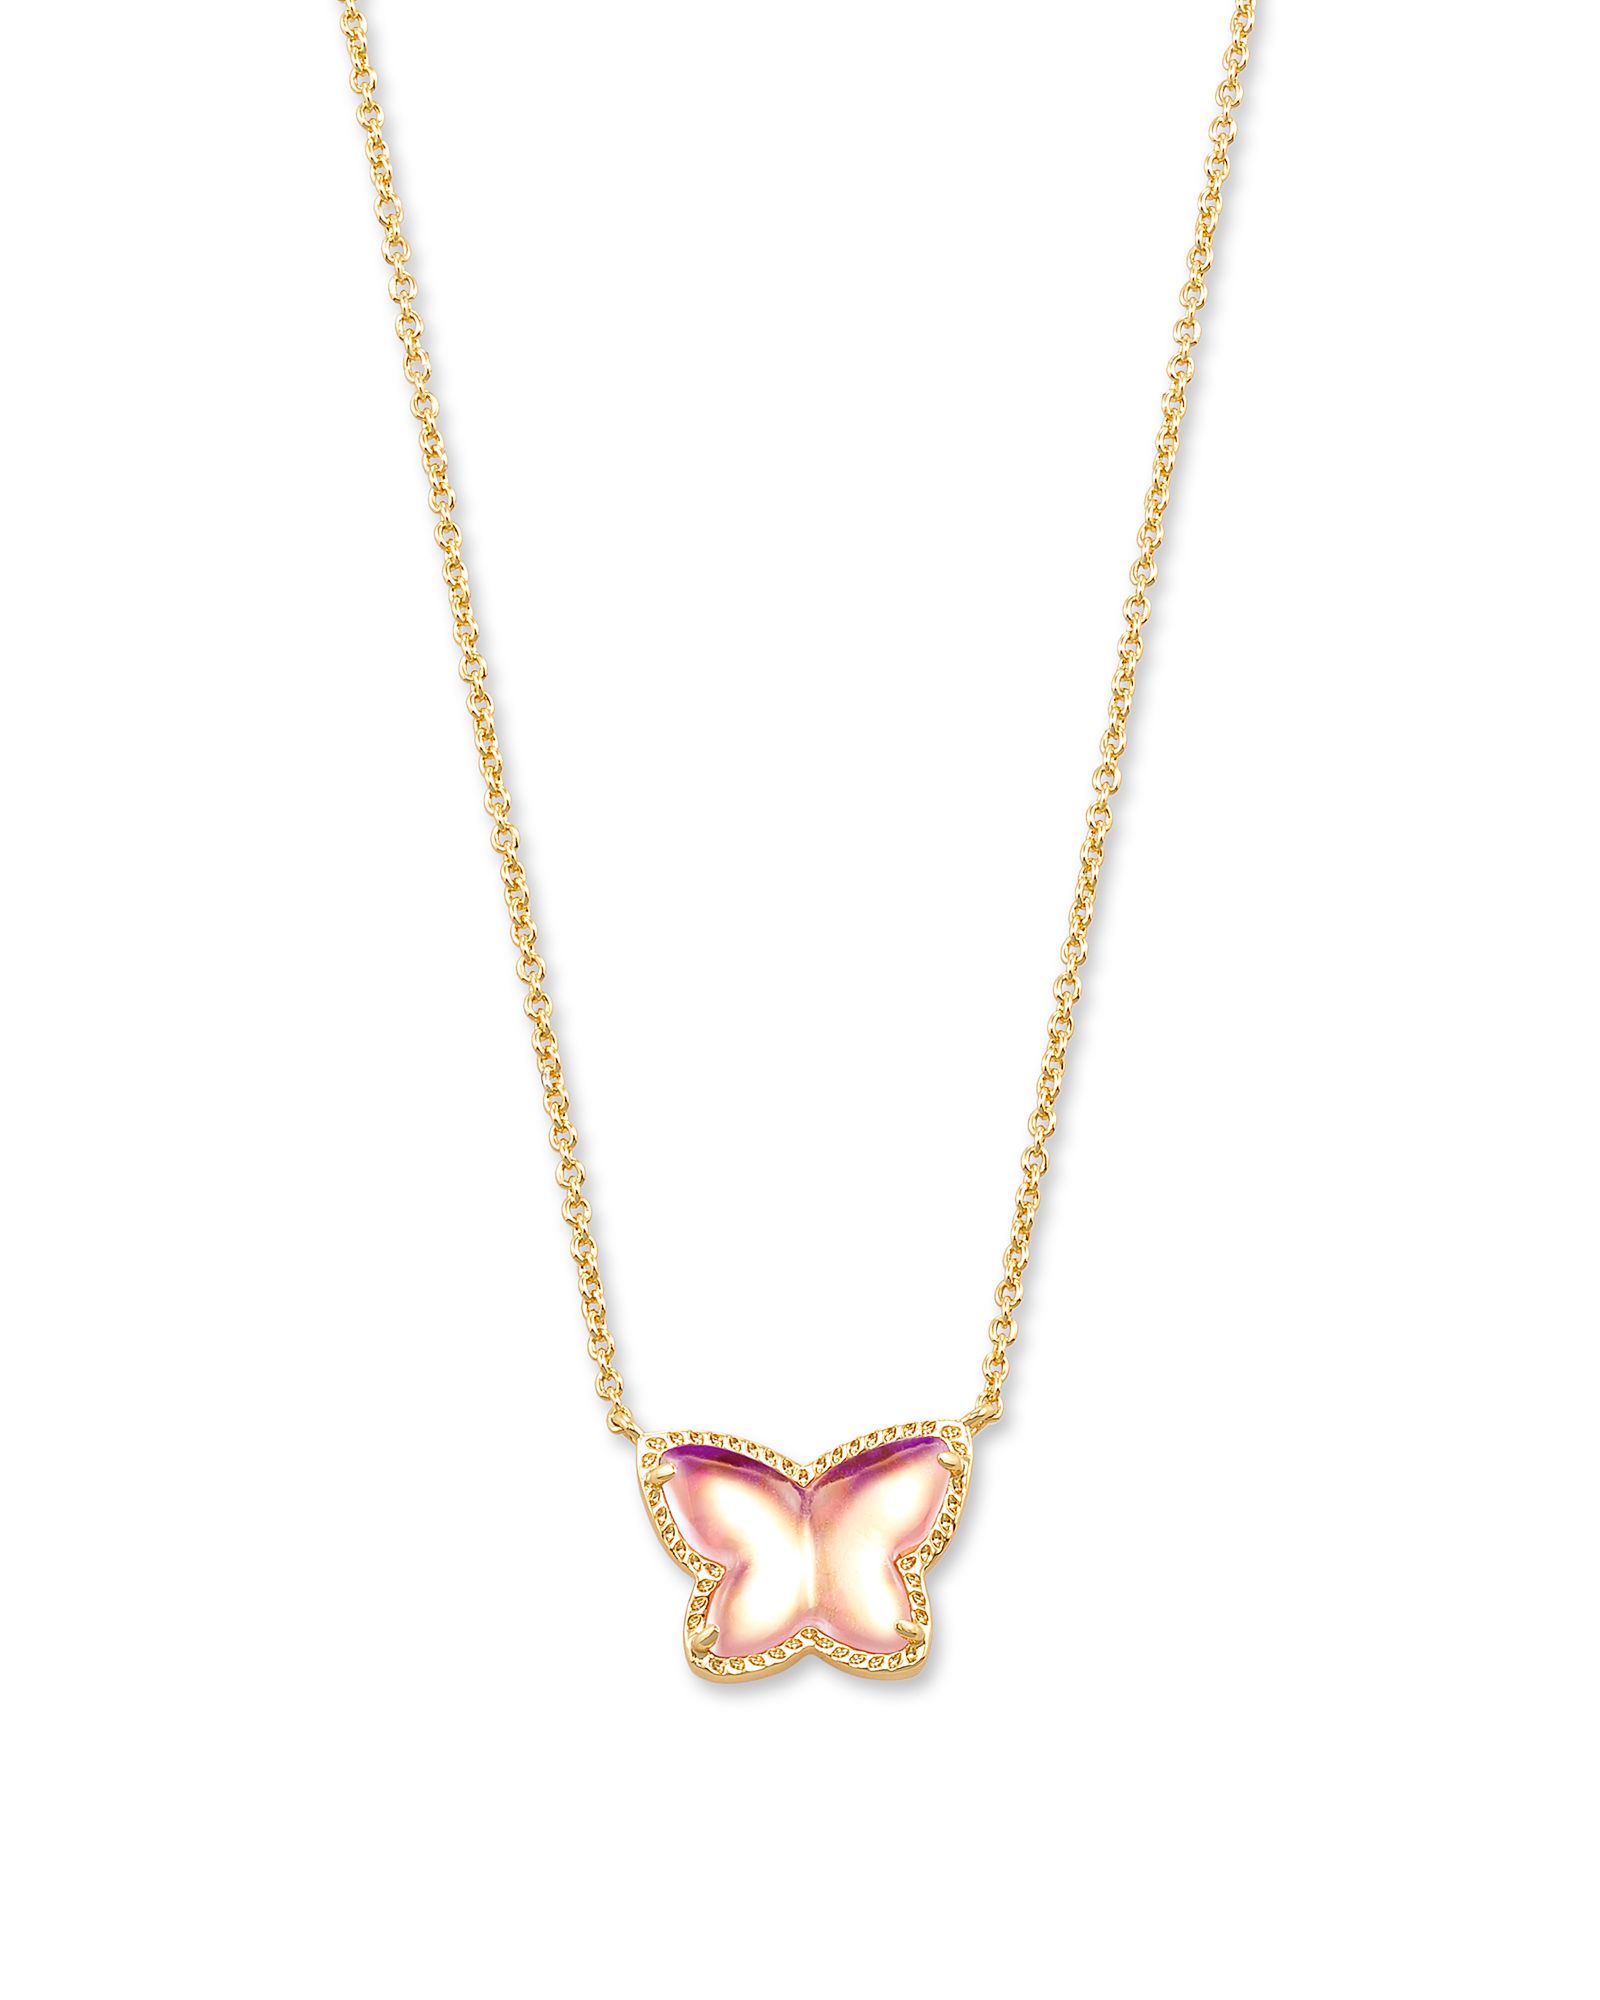 Lillia Butterfly Gold Pendant Necklace in Blush Dichroic Glass | Kendra Scott | Kendra Scott